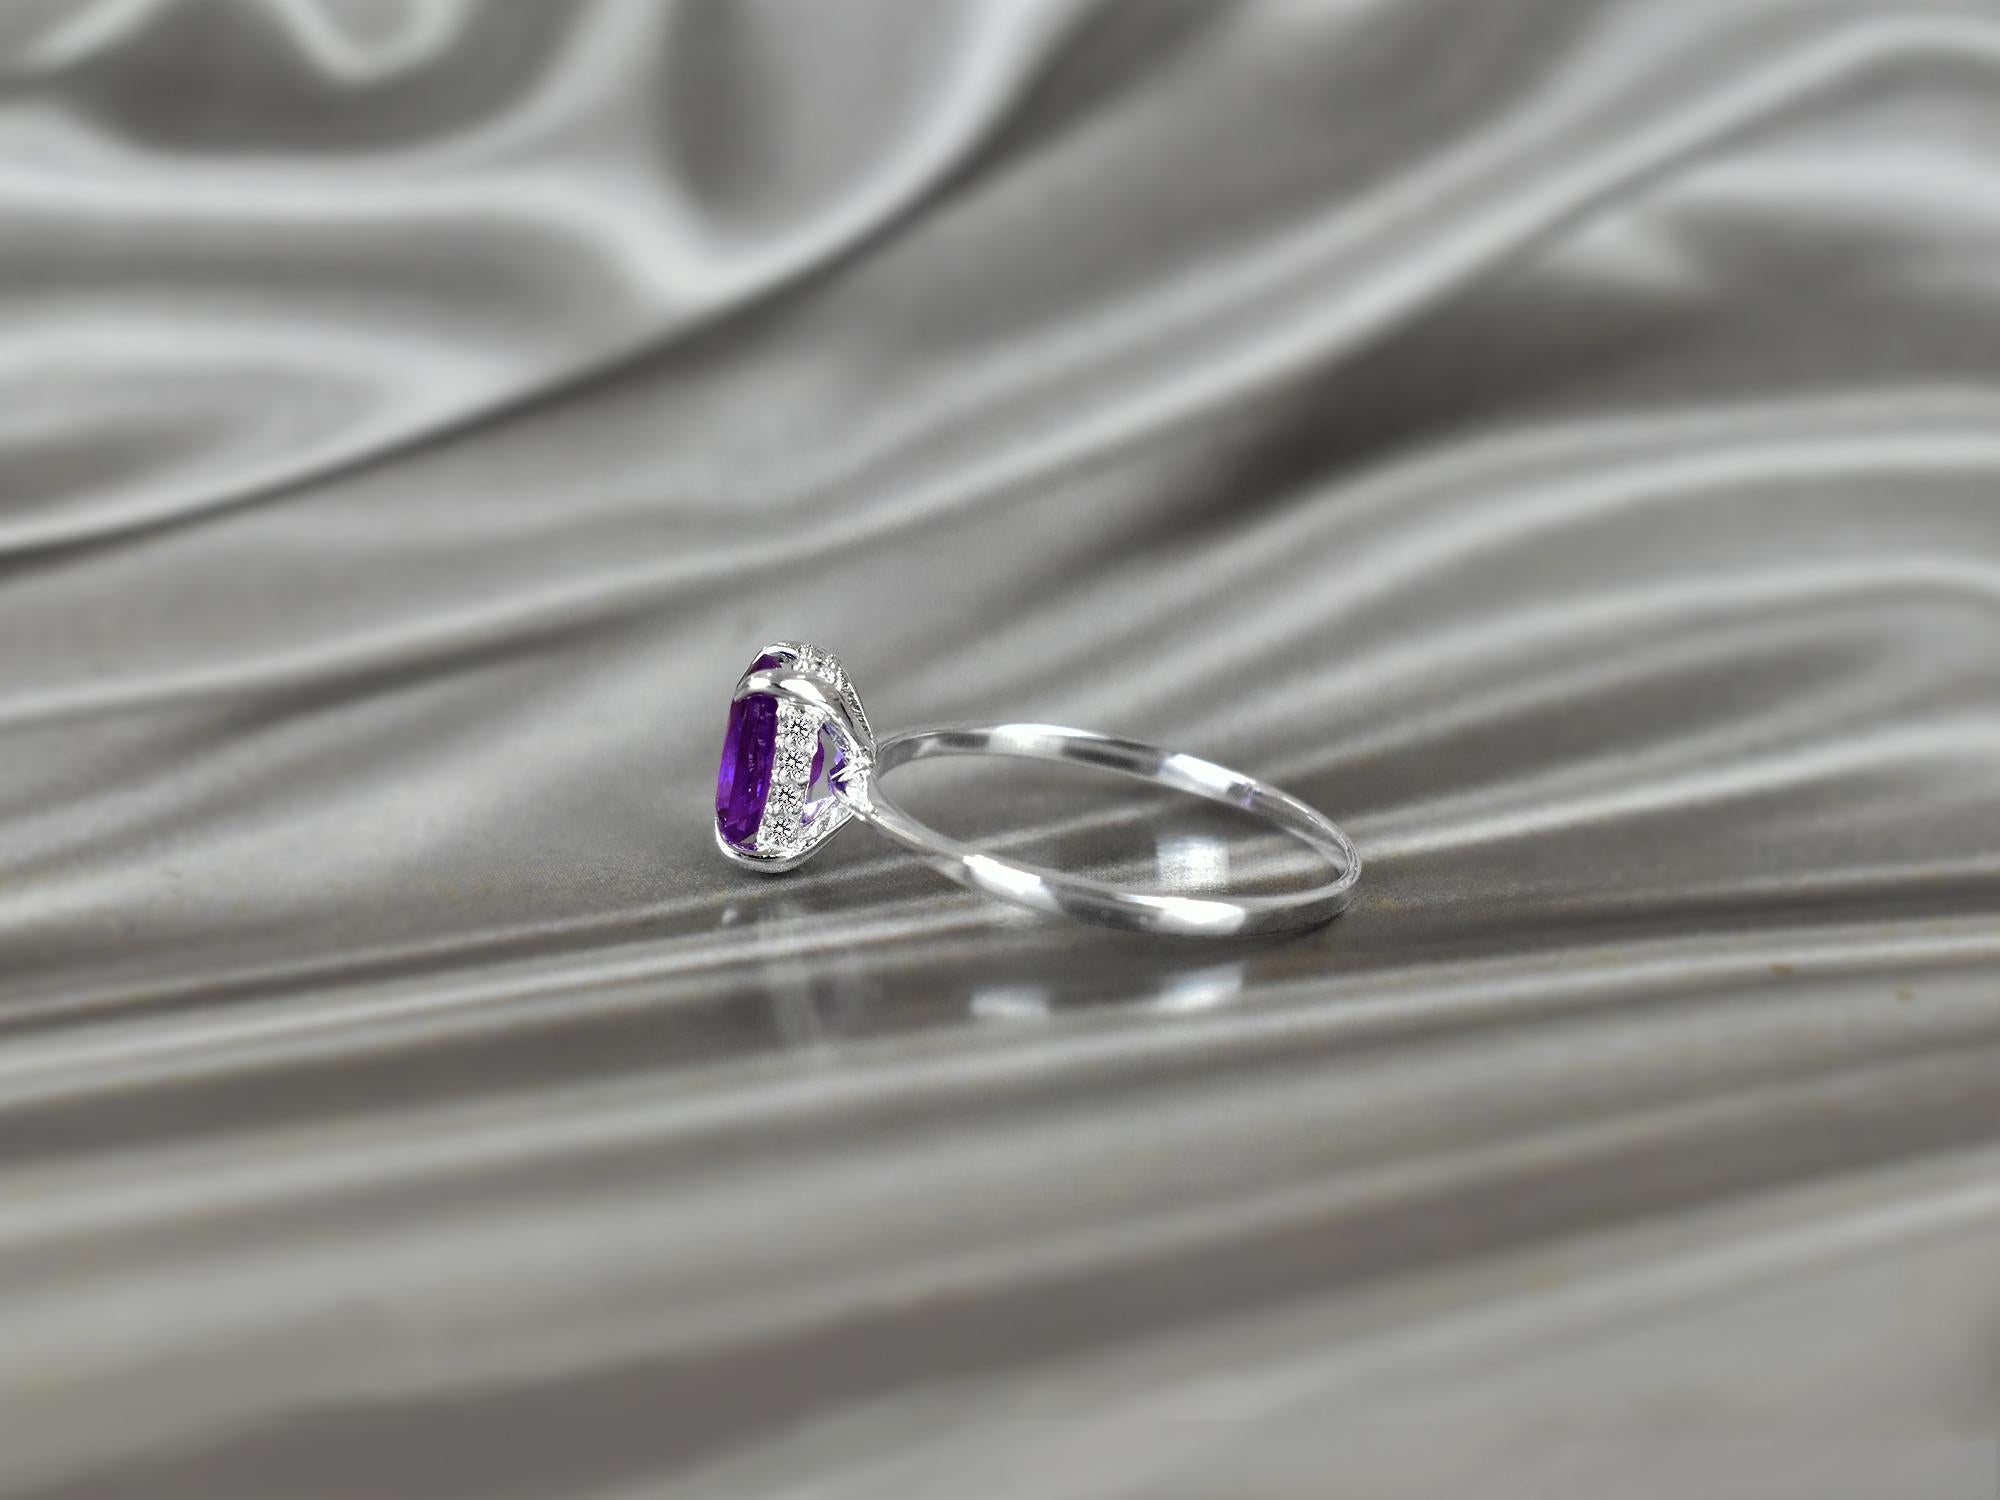 For Sale:  14k Gold Oval Gemstone 8x6 mm Oval Cut Gemstone Ring Gemstone Engagement Ring 10